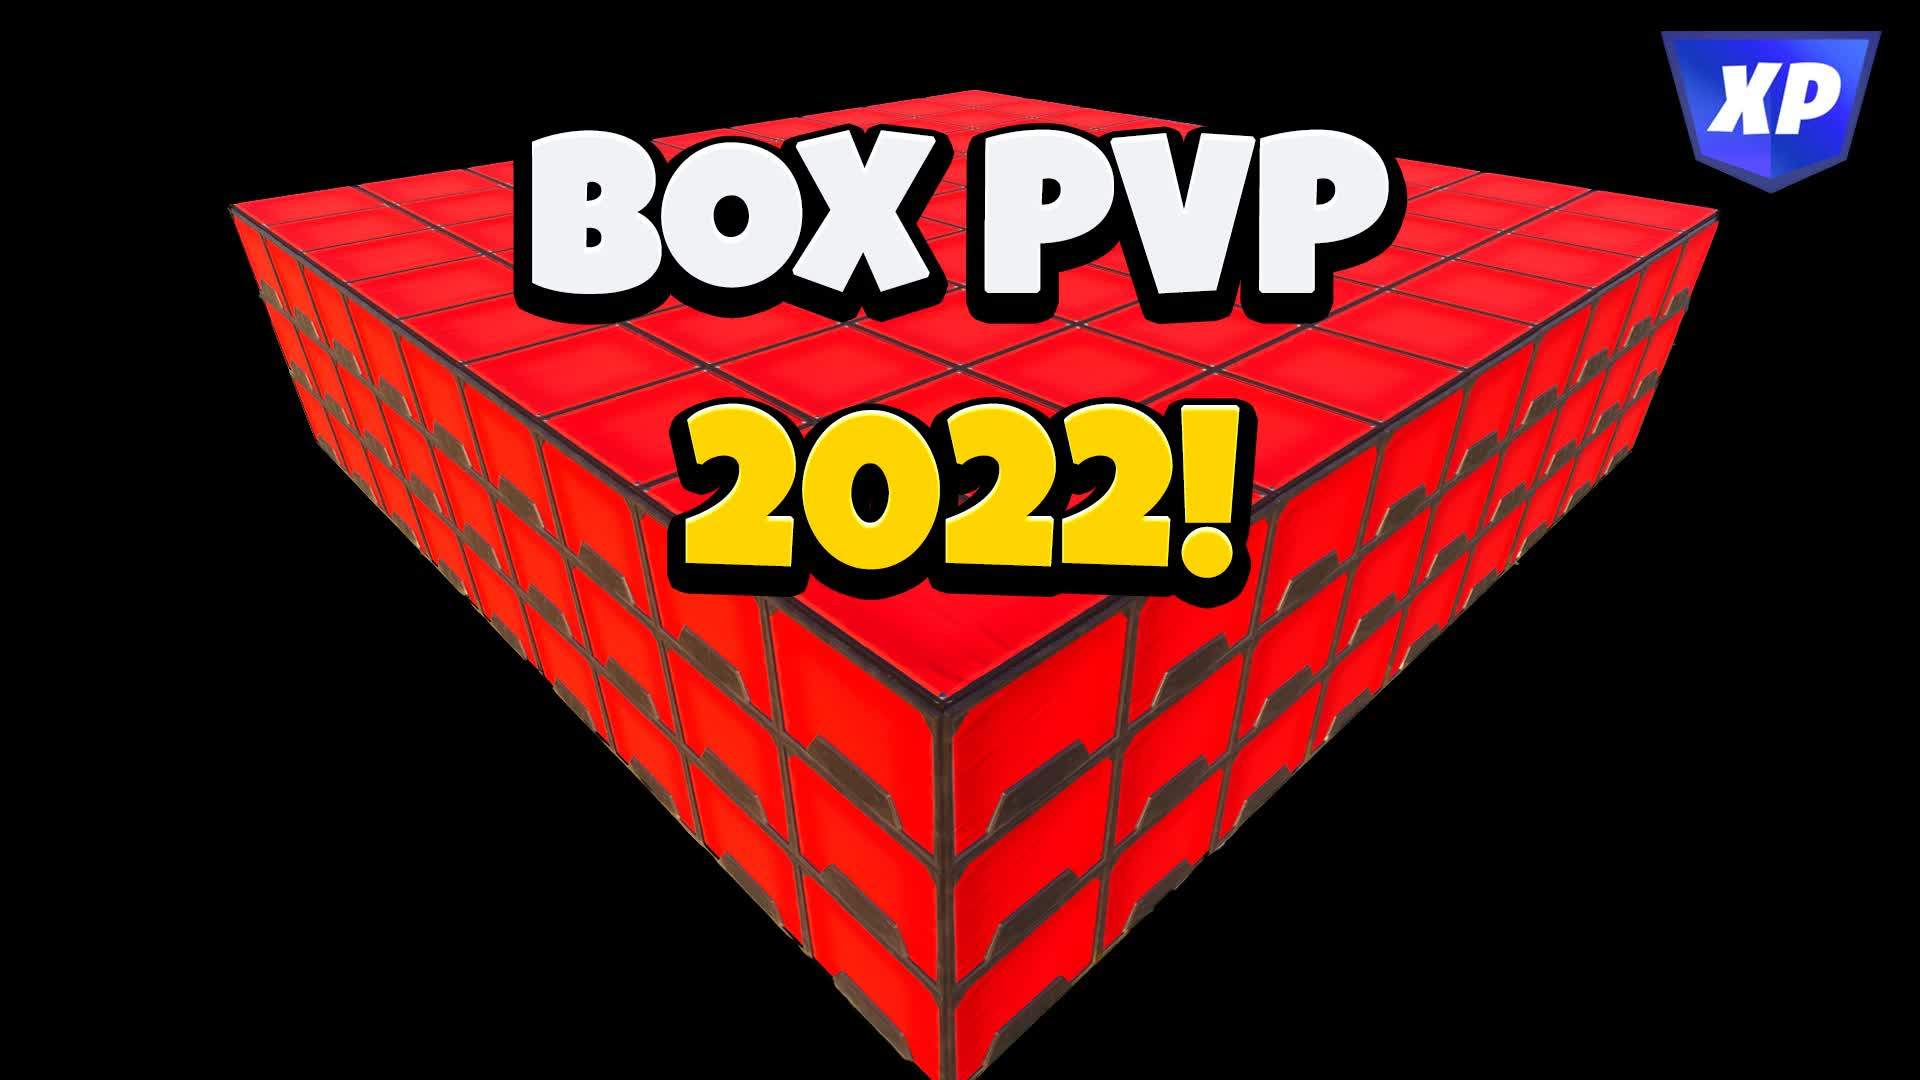 BOX PVP 2022!